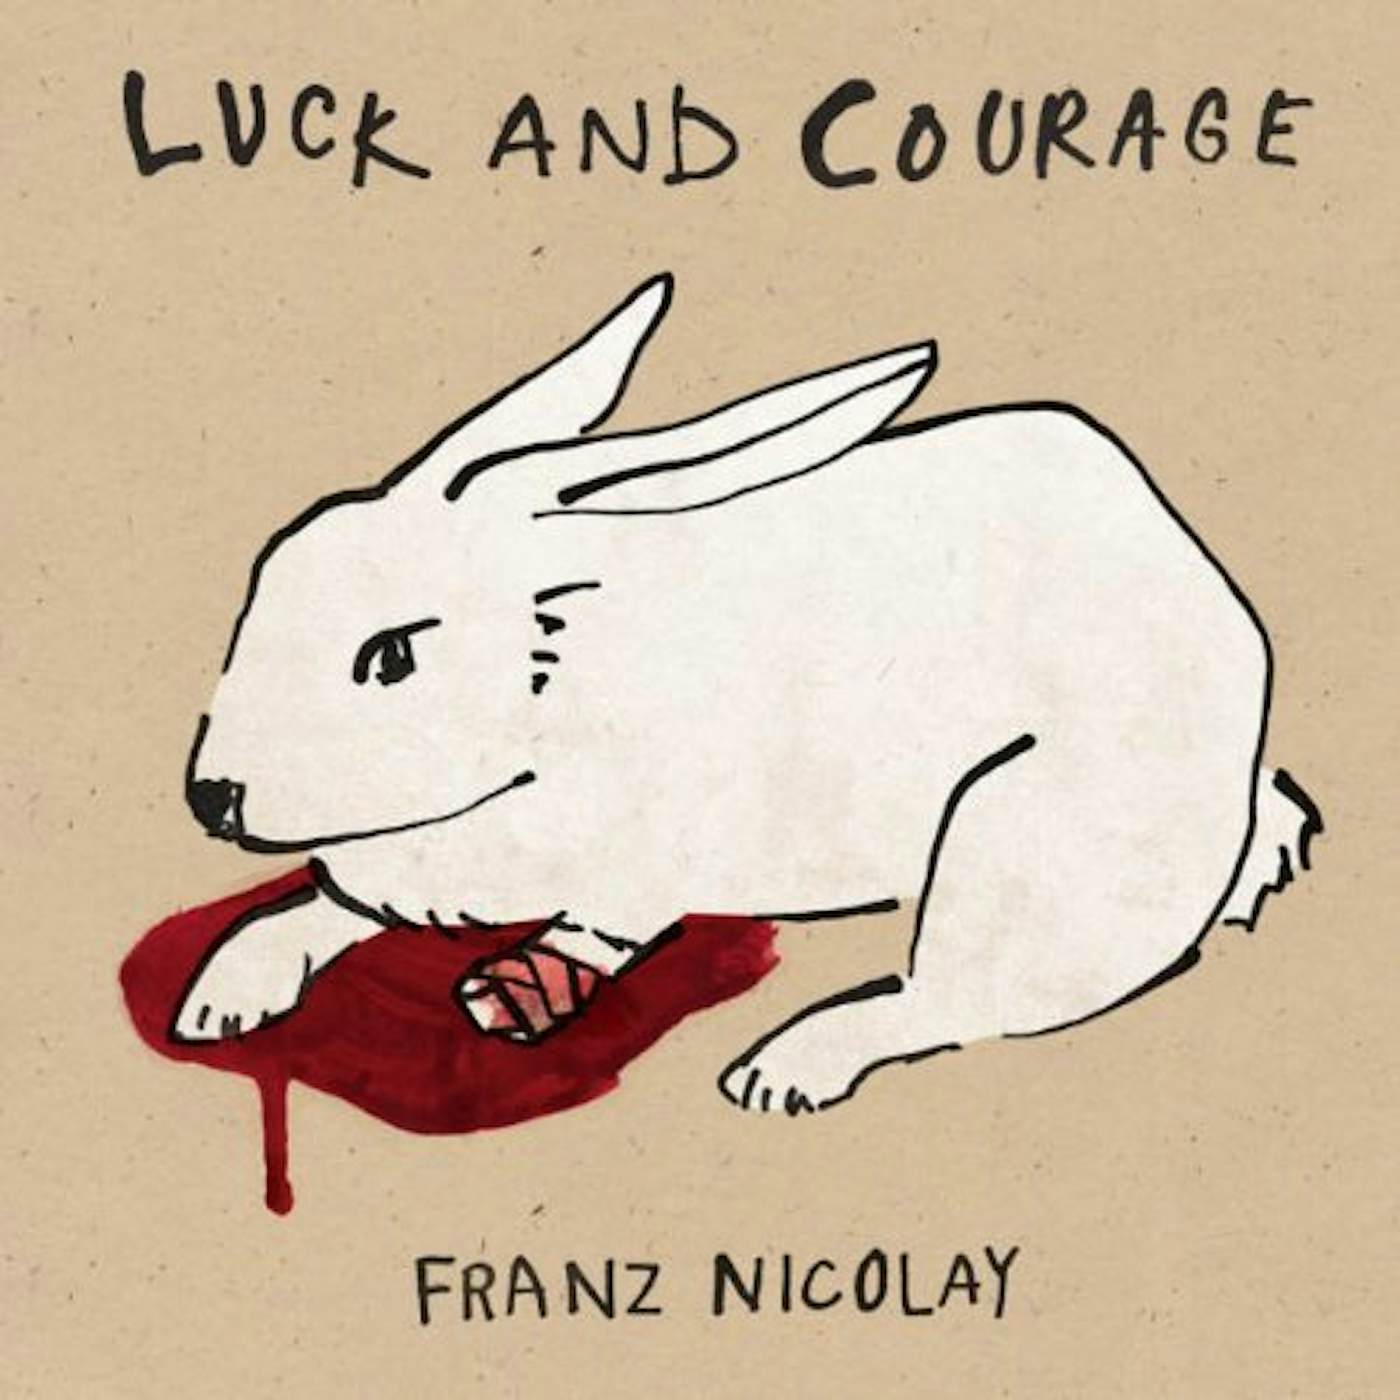 Franz Nicolay LUCK & COURAGE CD